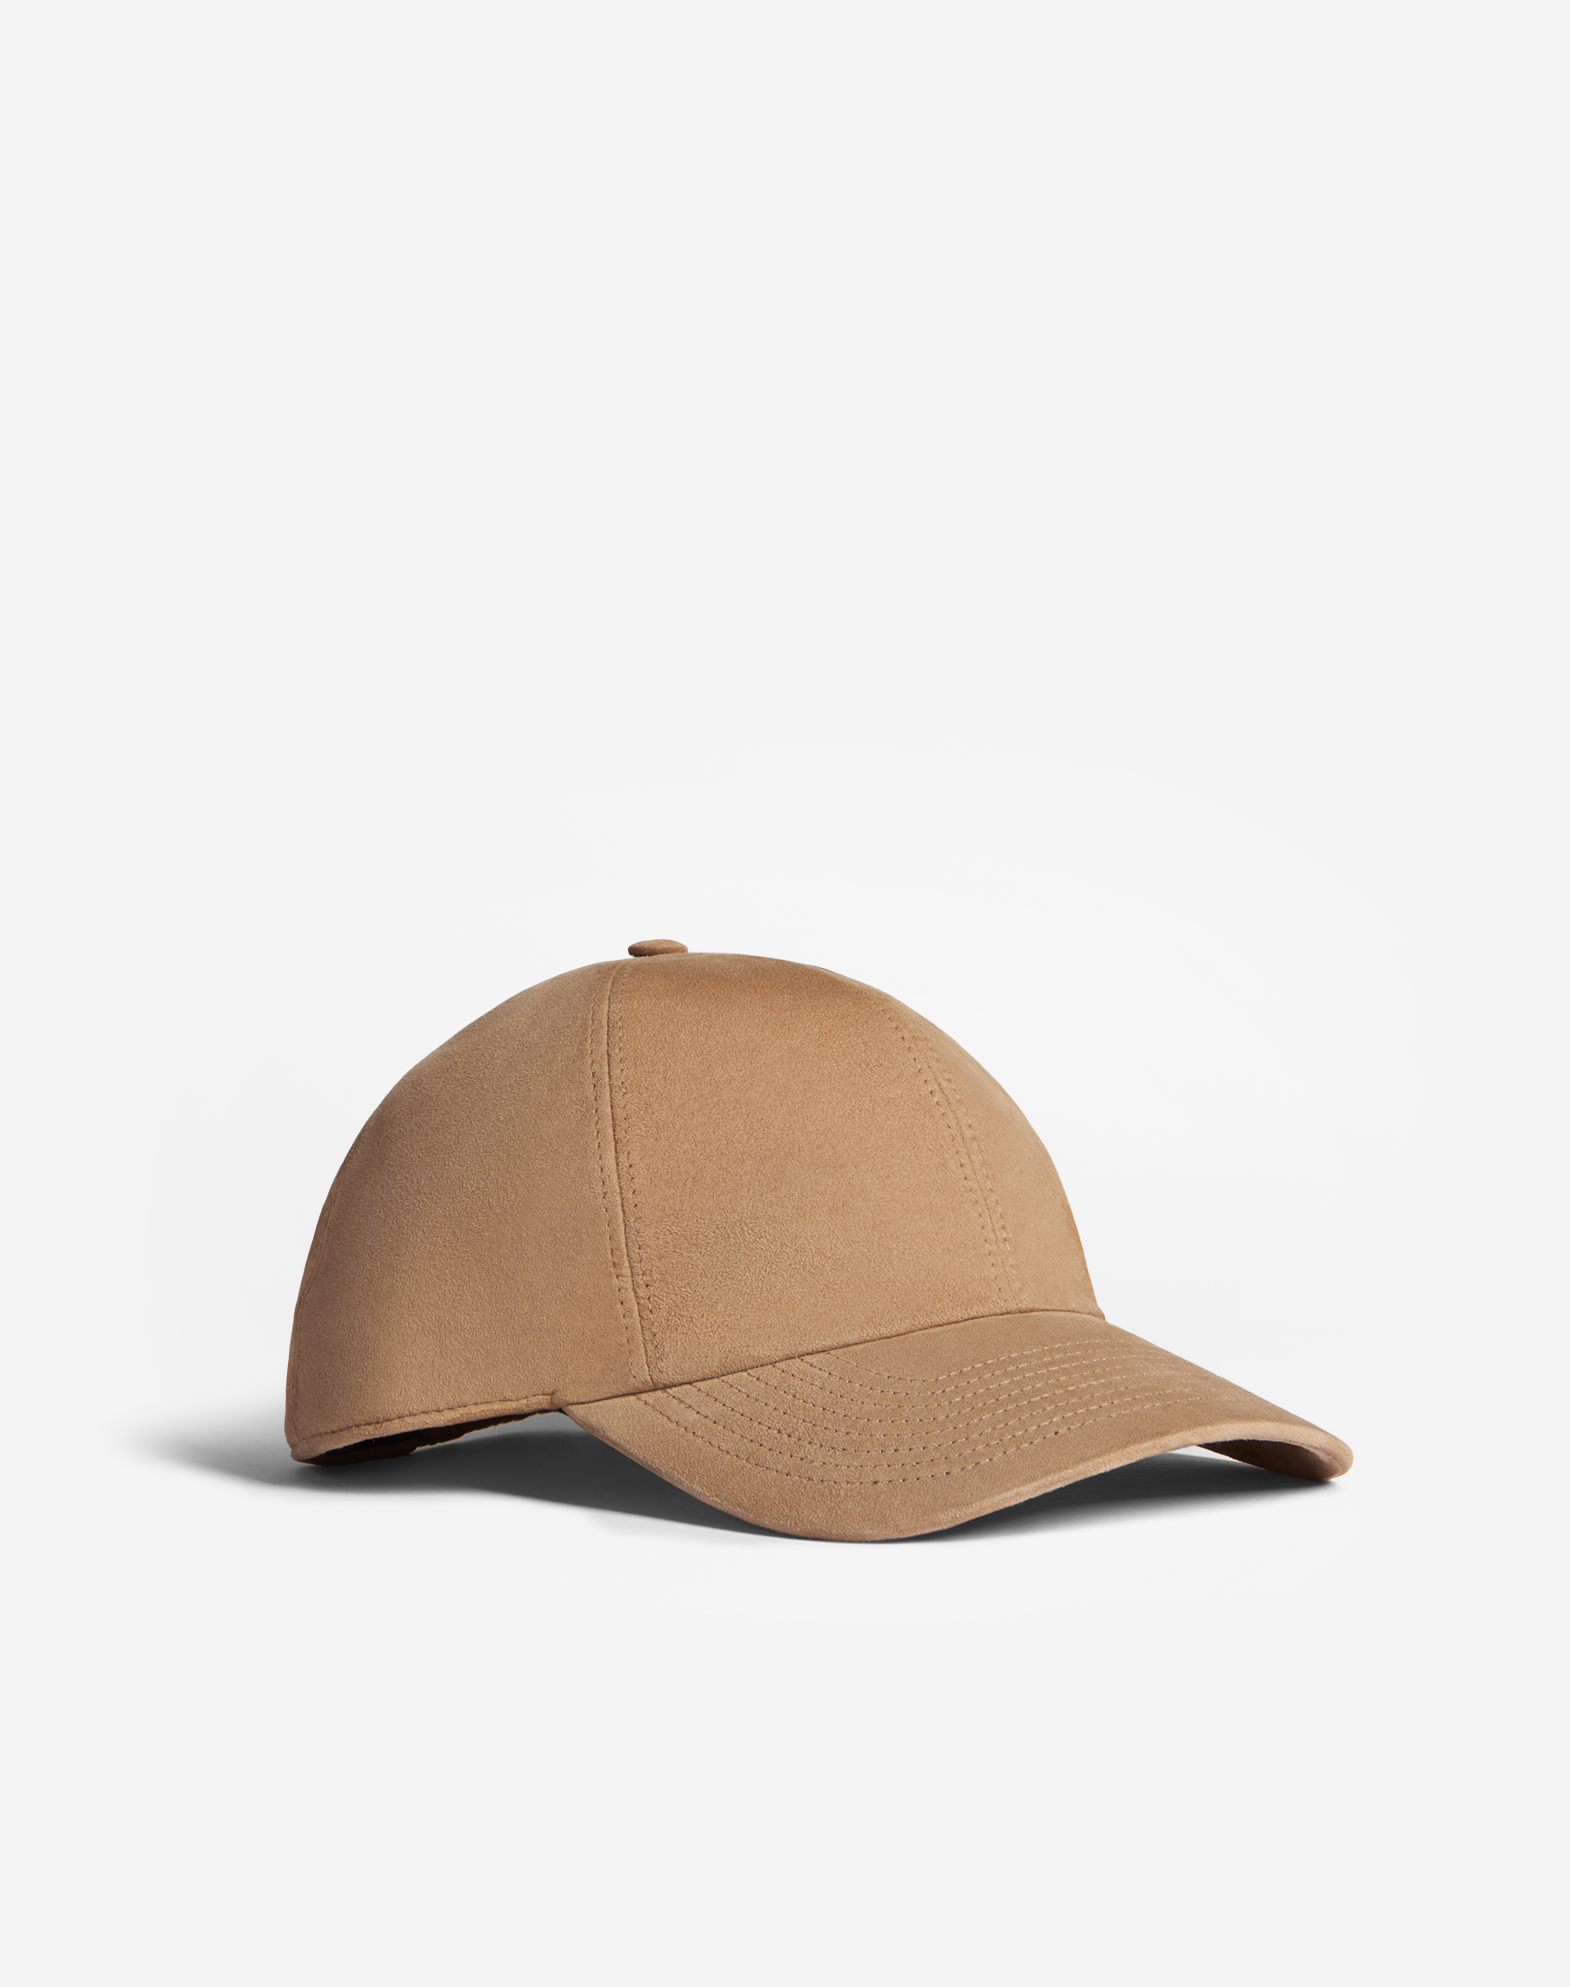 Dunhill Luxury Men's Hats